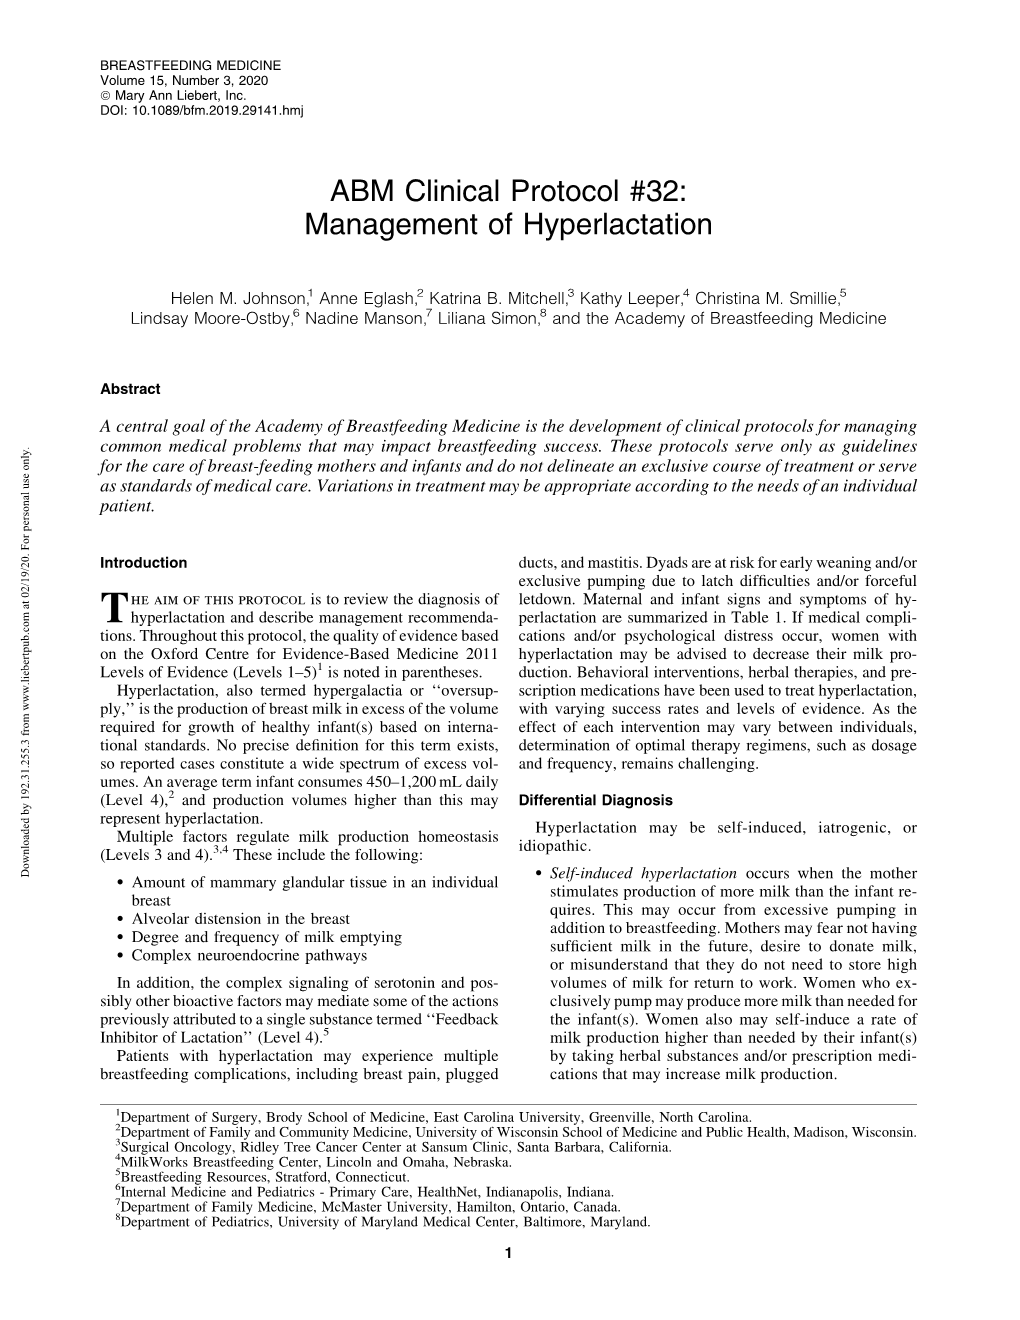 ABM Clinical Protocol #32: Management of Hyperlactation